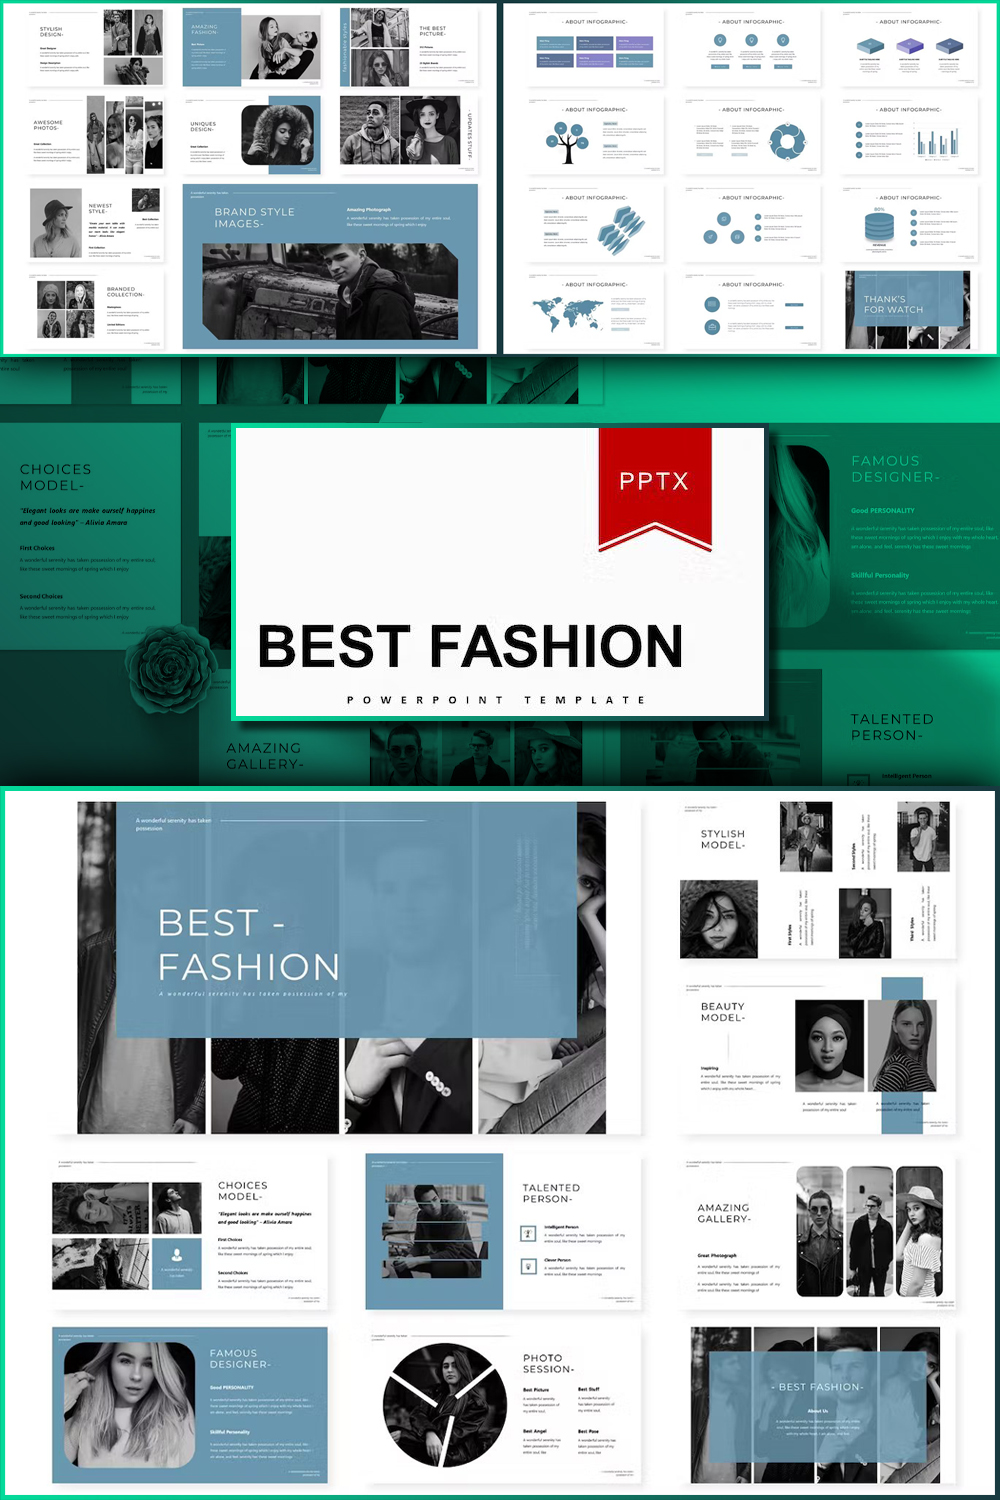 Best Fashion | Powerpoint Template - Pinterest.